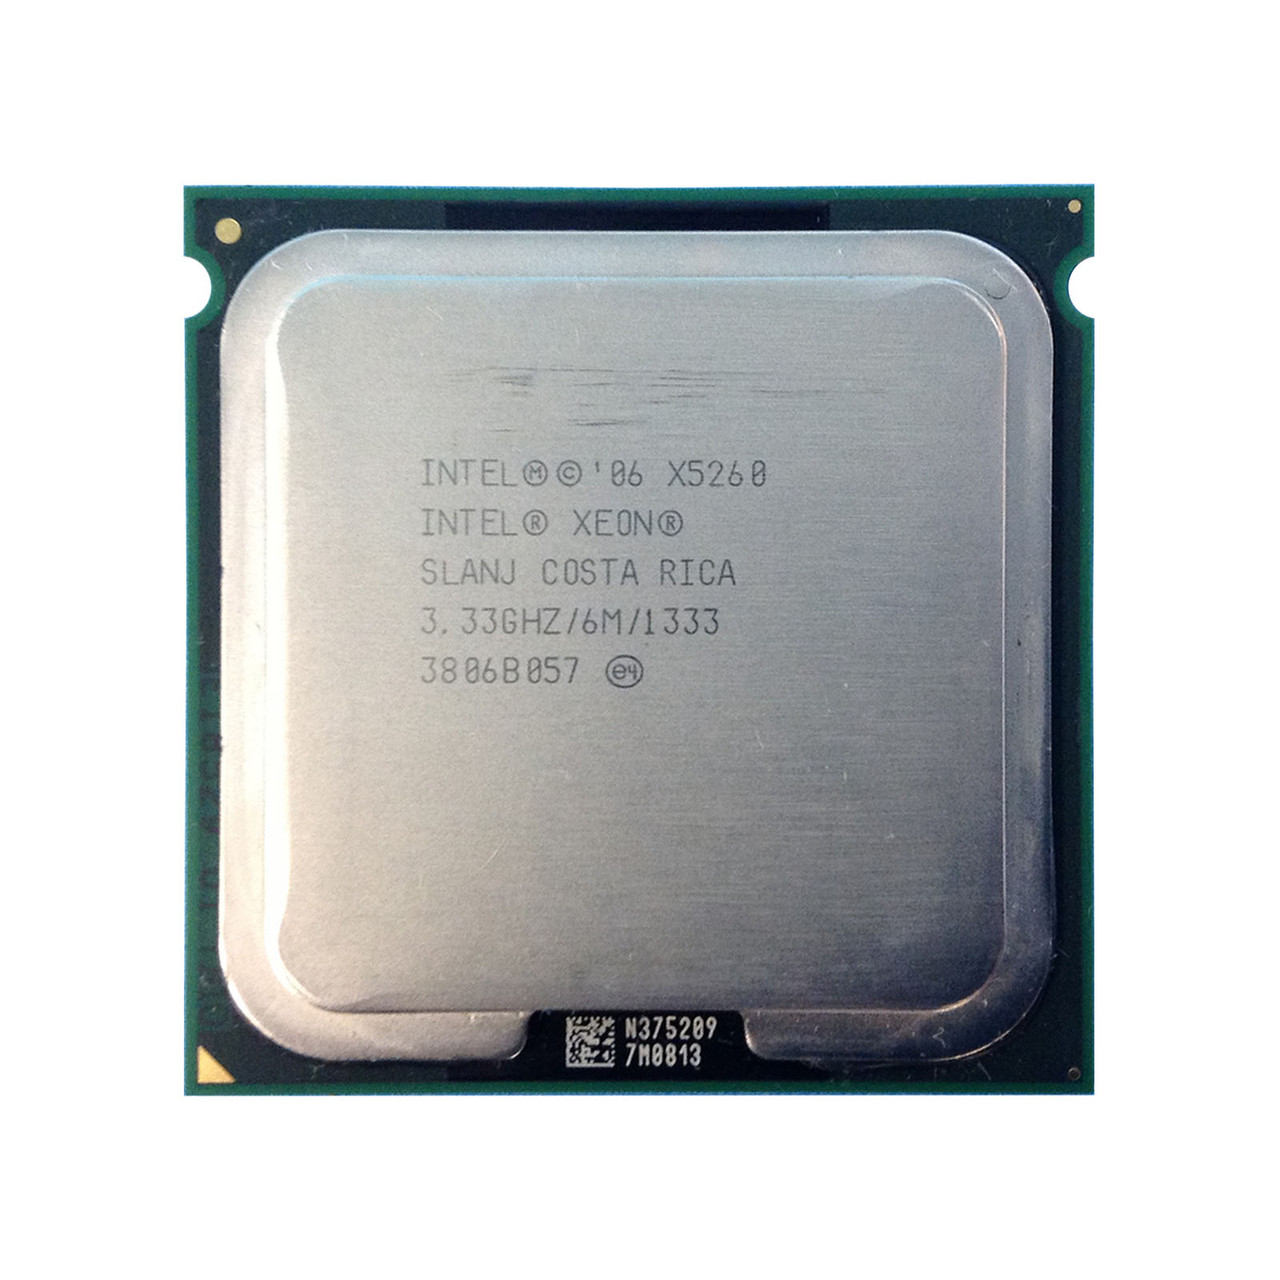 Intel SLANJ Xeon X5260 DC 3.33Ghz 6MB 1333Mhz Processor